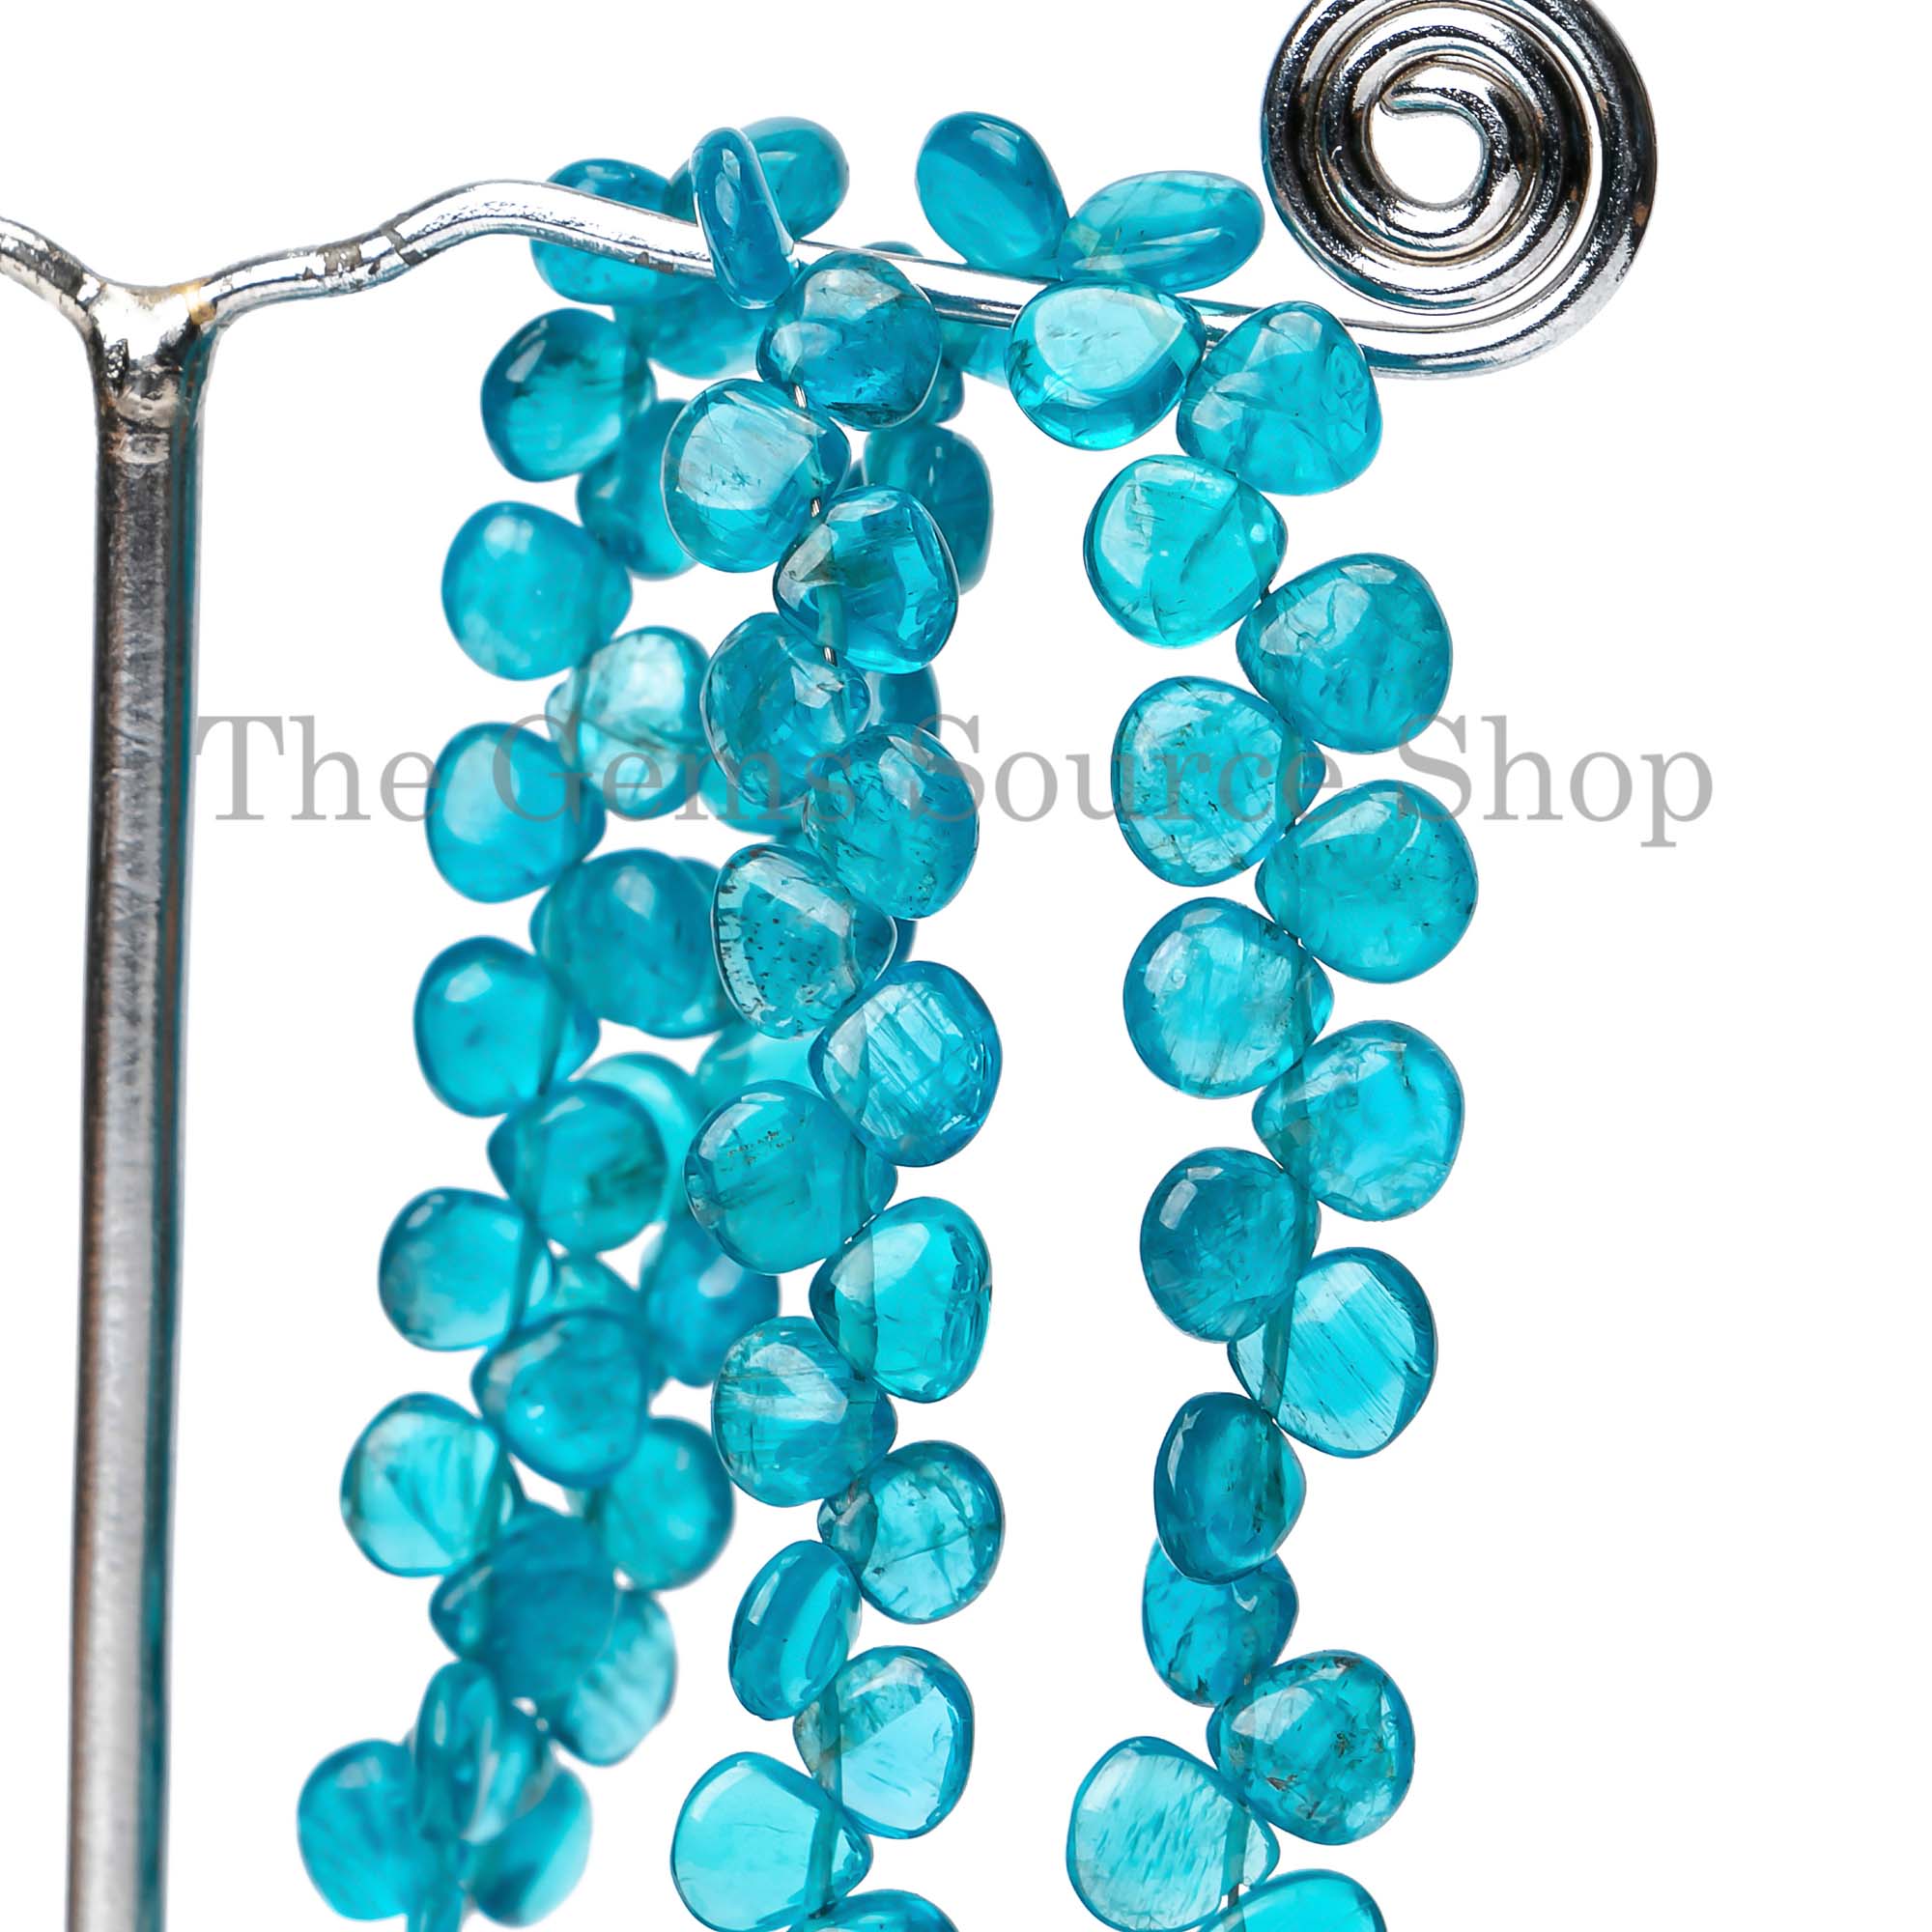 Neon Apatite Smooth Heart Gemstone Beads Briolette Strand, Wholesale Beads